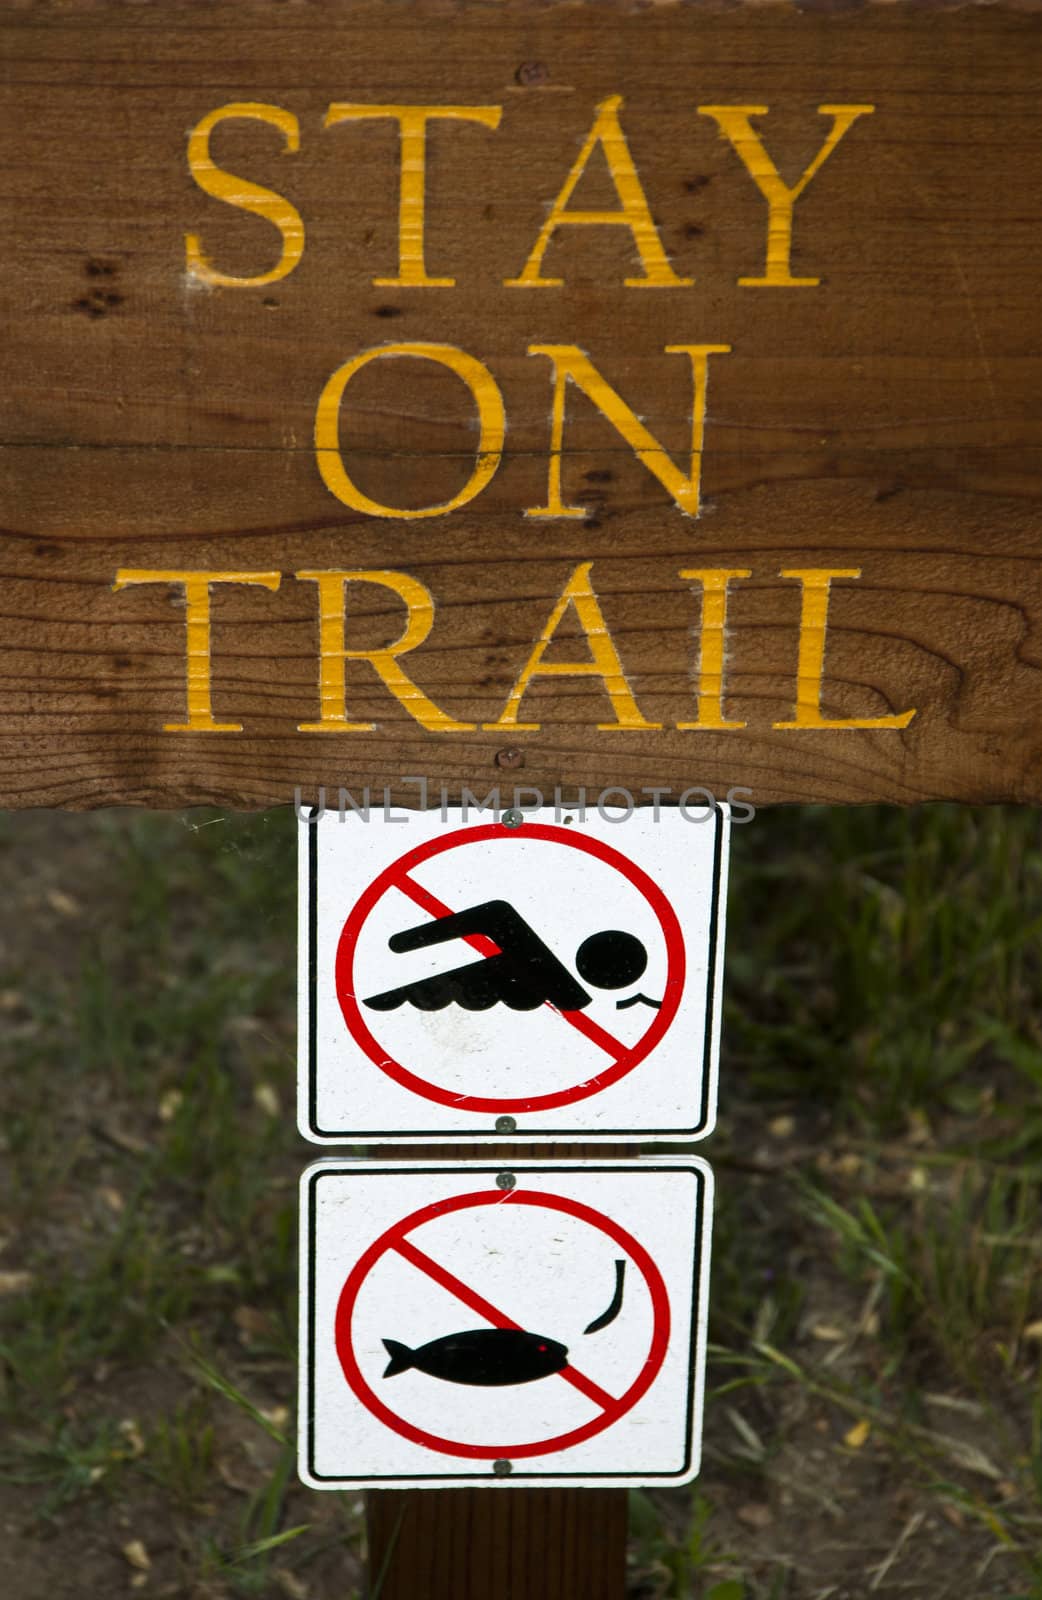 Trail sign by Aurum